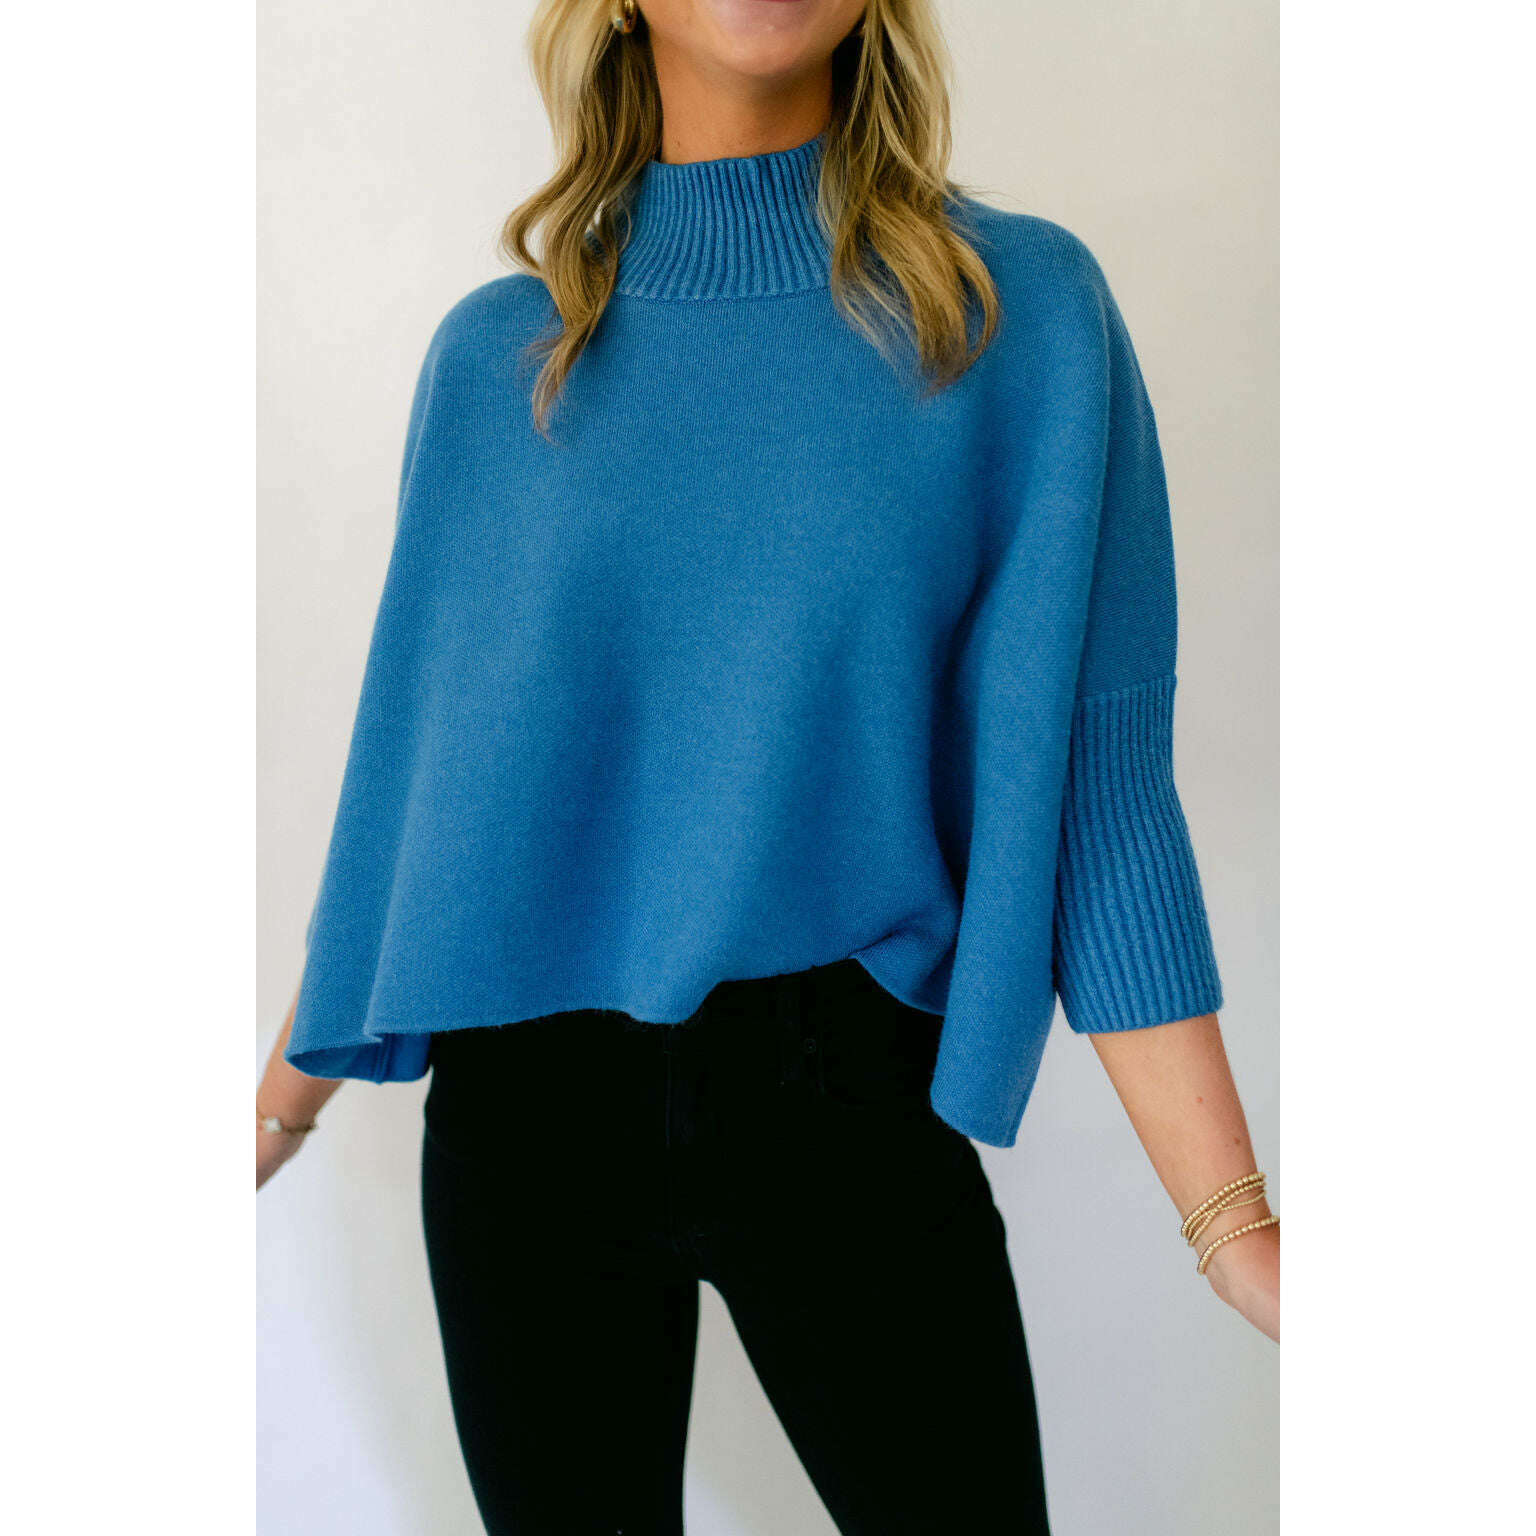 8.28 Boutique:Kerisma Knits,Kerisma Aja Sweater in Persian Blue,Sweaters